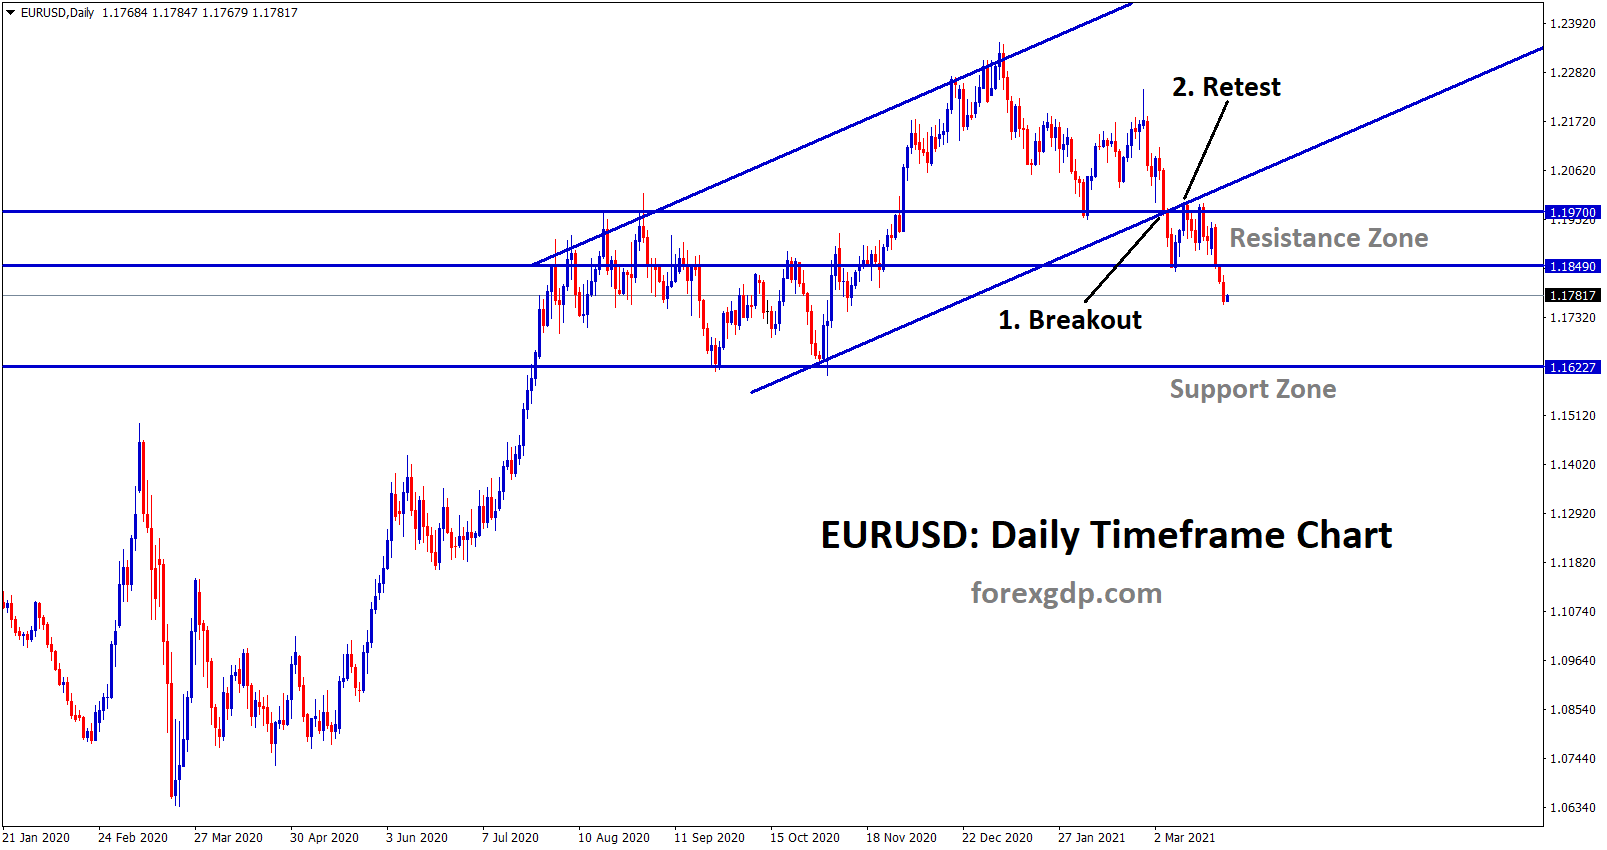 EURUSD breakout retest ranging now